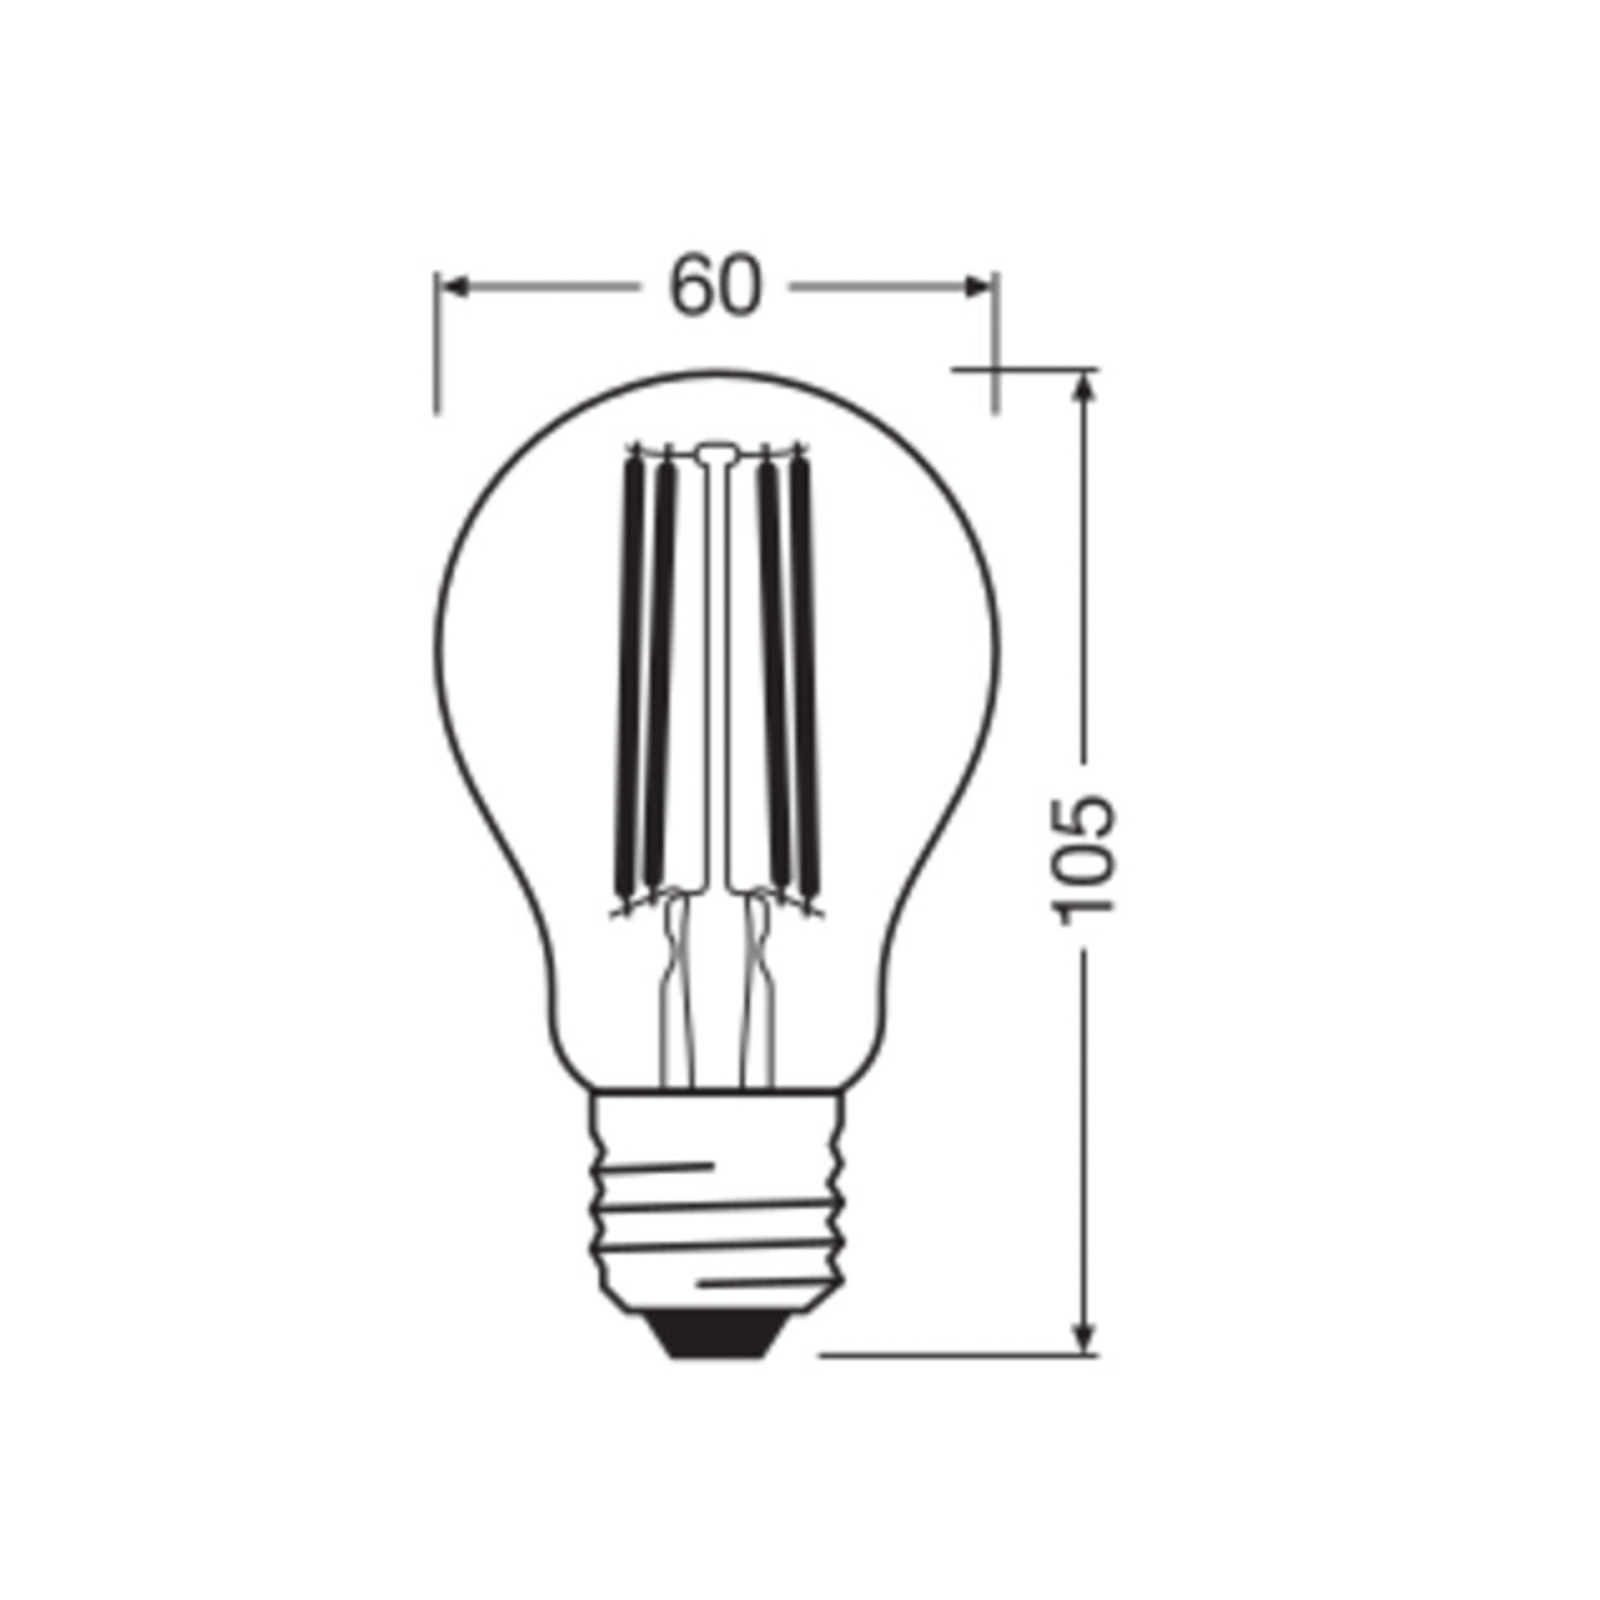 OSRAM LED Classic, filament, E27, 5 W, 1,055 lm, 4,000 K